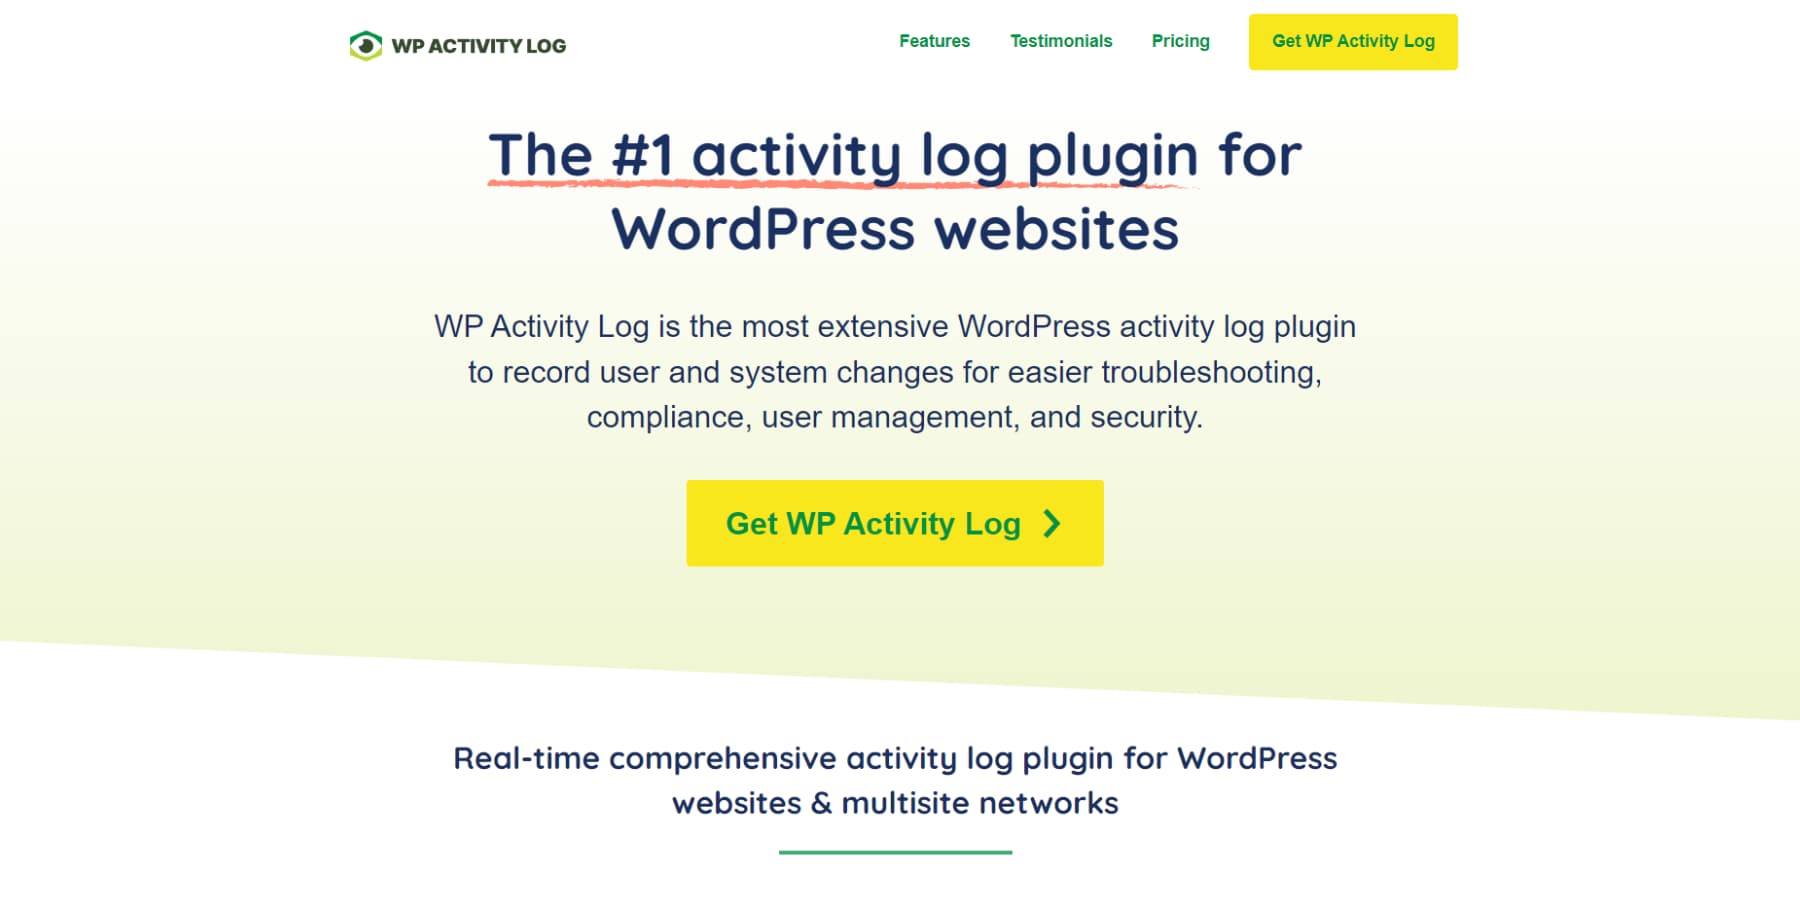 A screenshot of WP Activity Log's Homepage